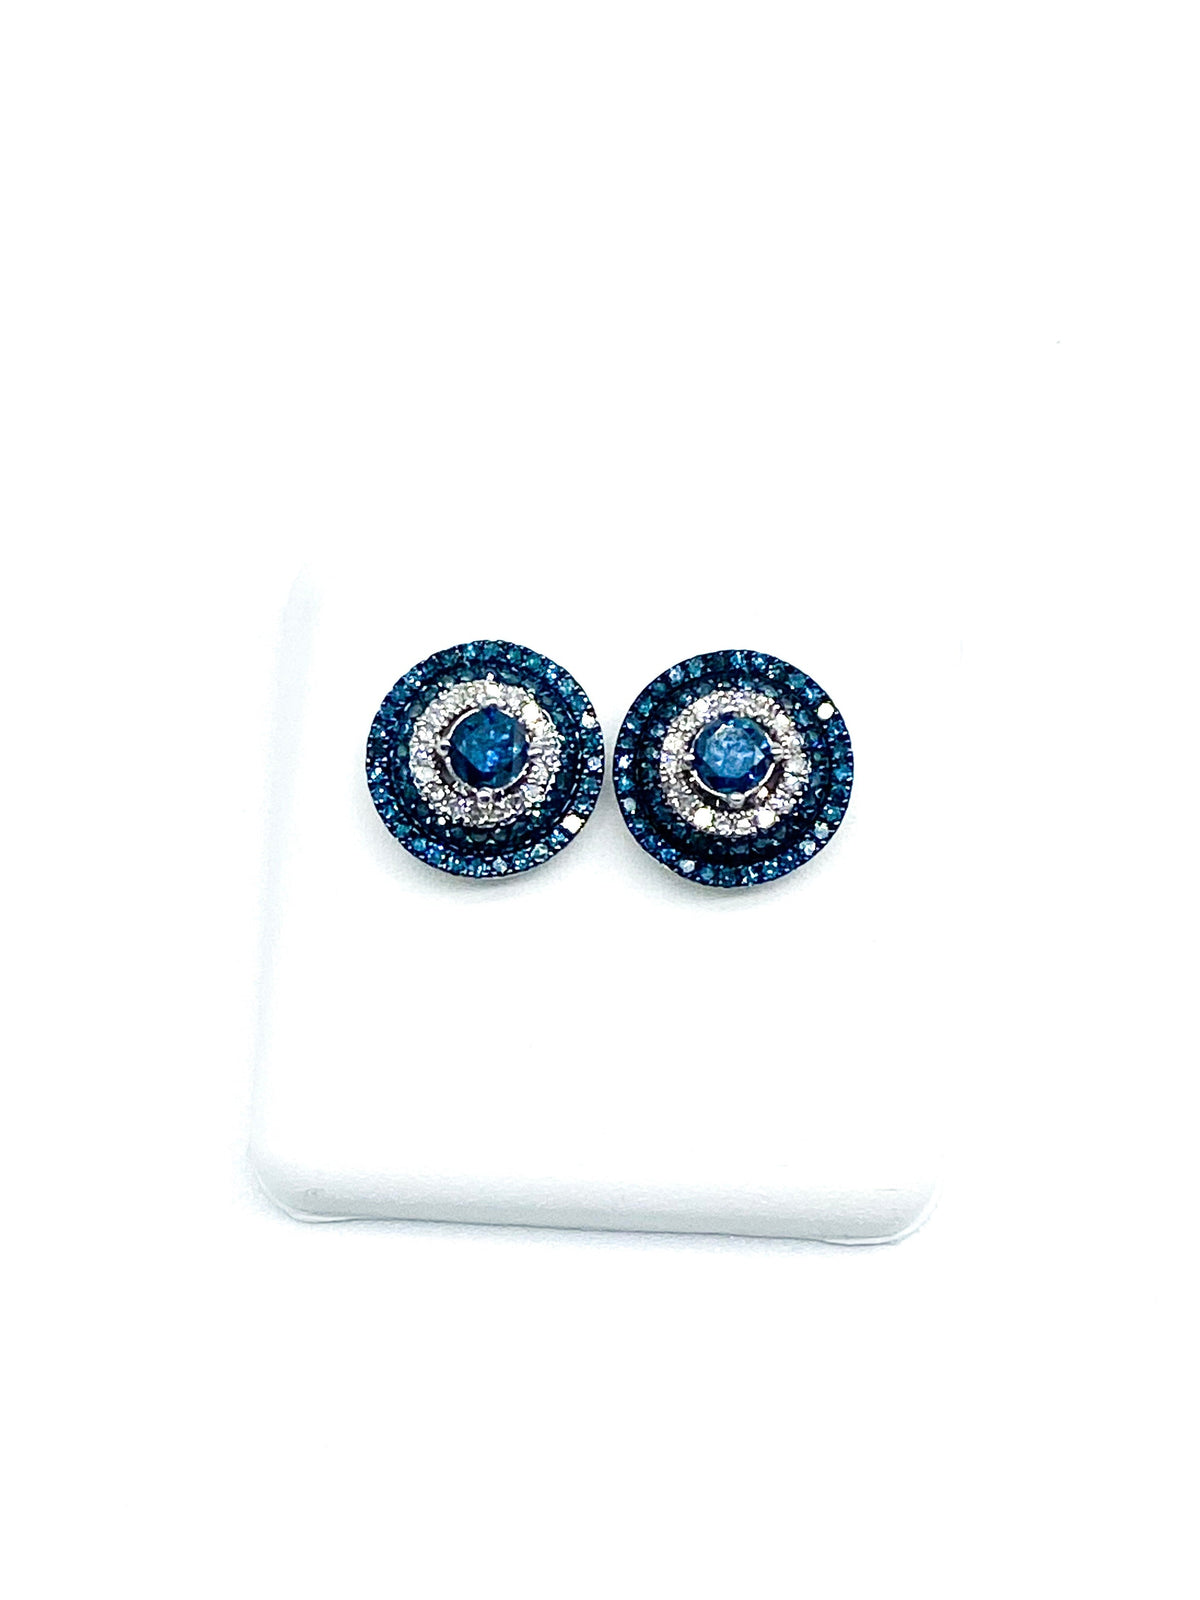 1.03 Point Blue Treated Genuine Round Brilliant Diamond Earrings